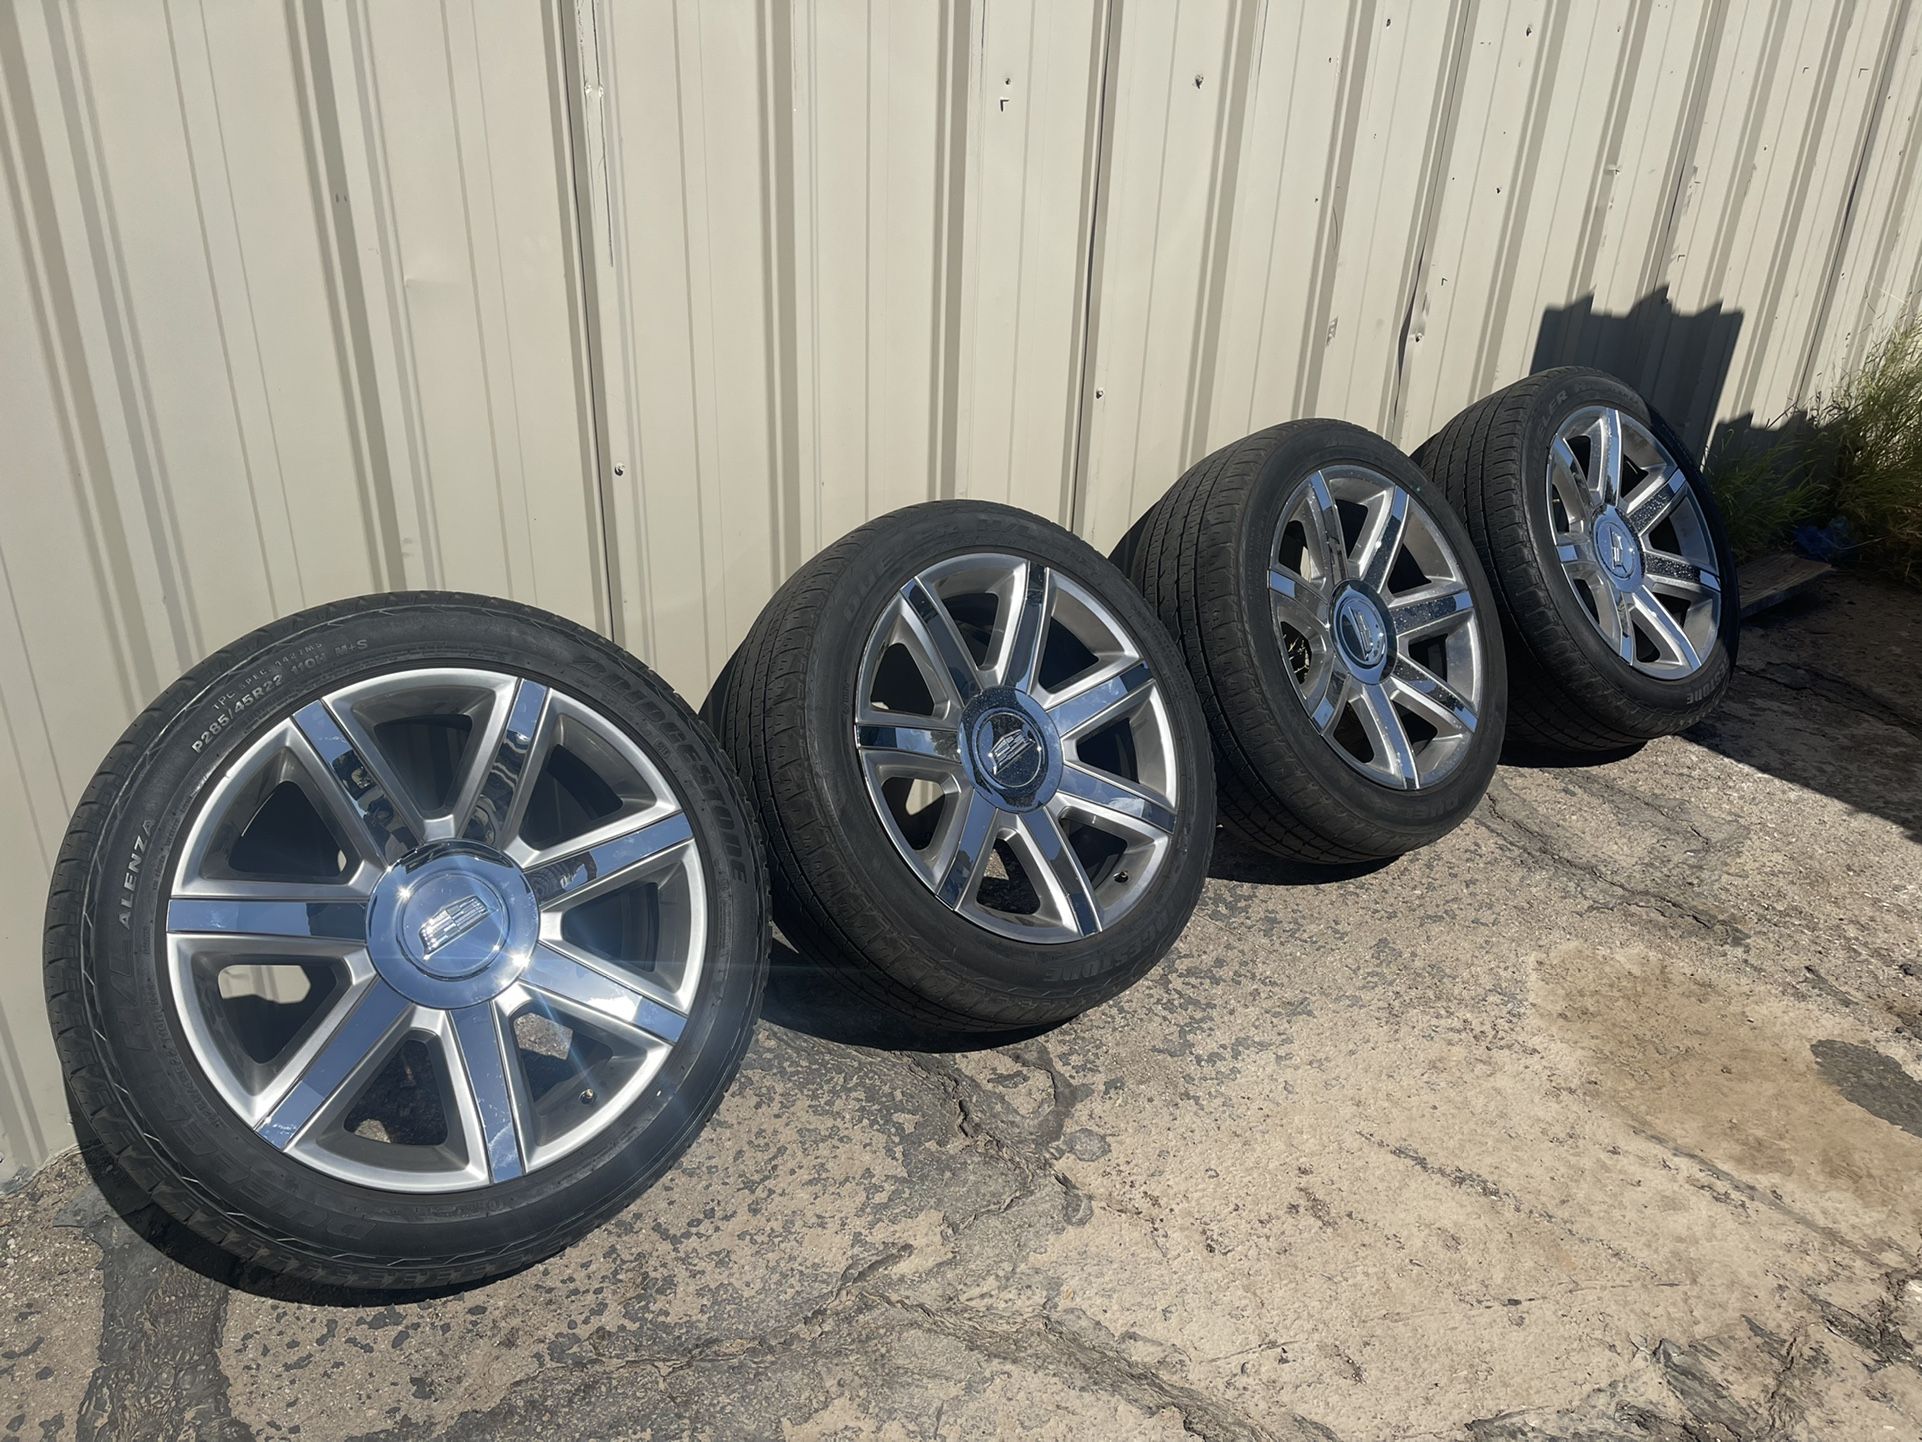 2020 Cadillac Escalade Wheels And Tires located In Mesa Az